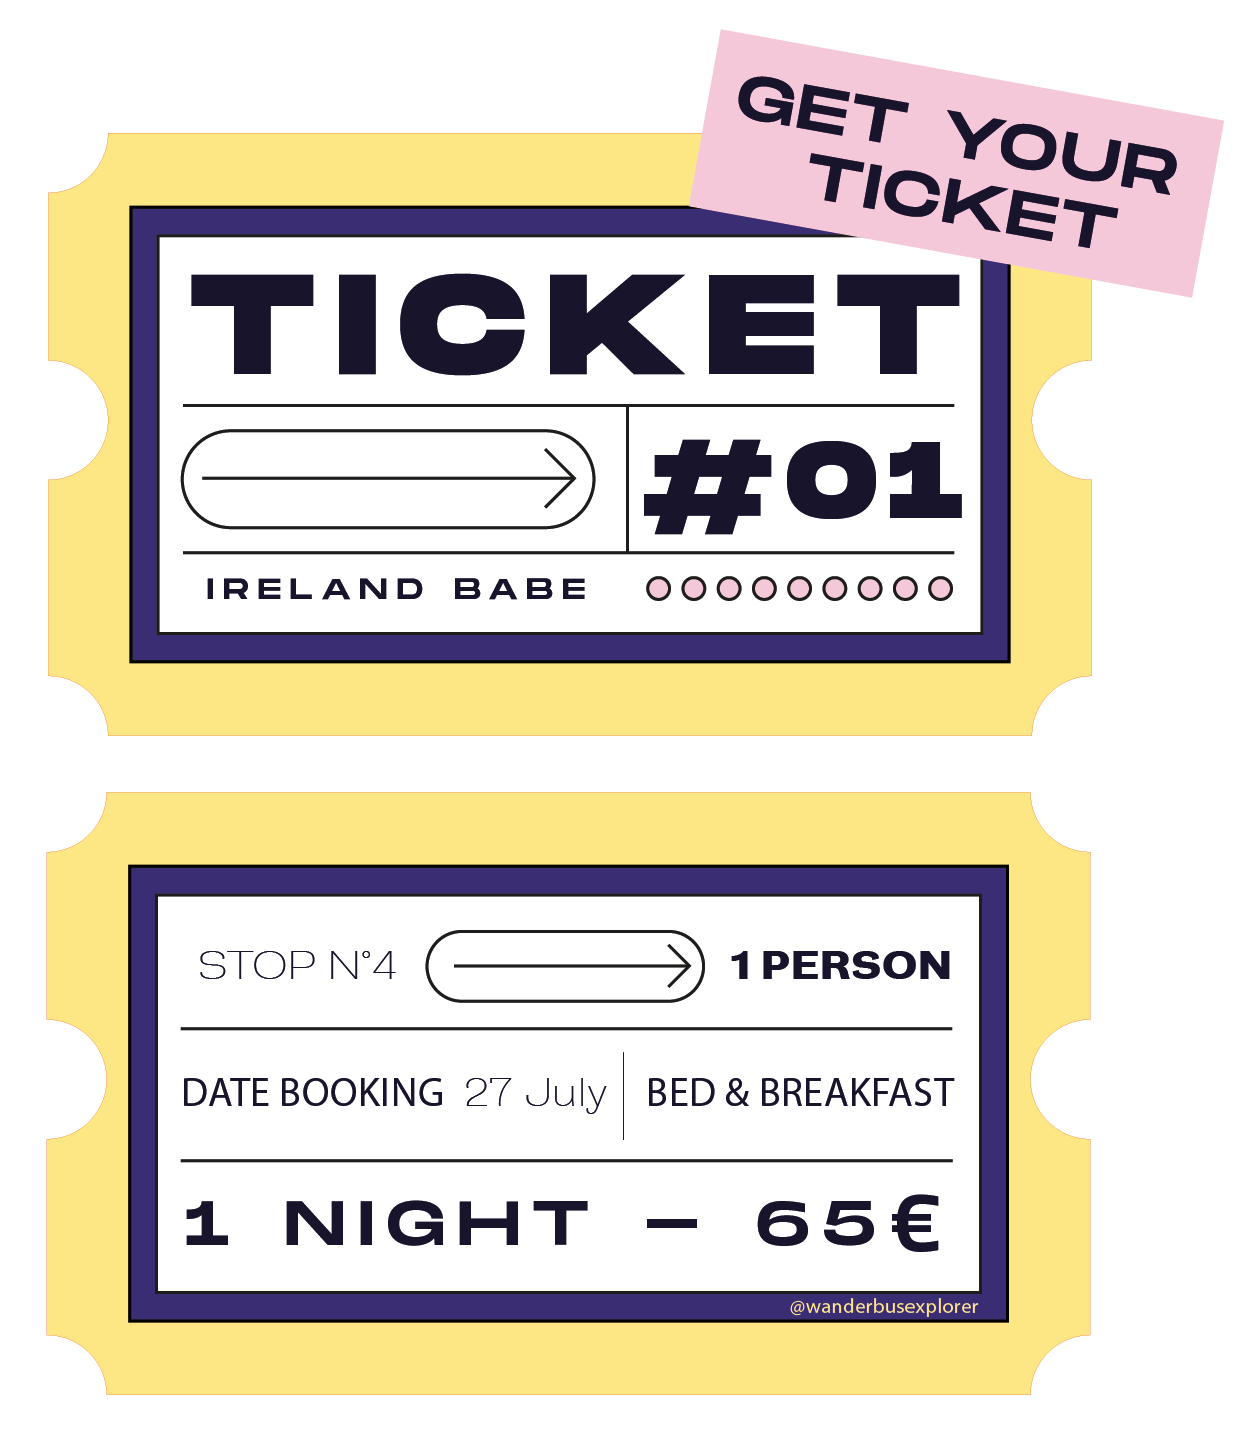 Ticket Wanderbus